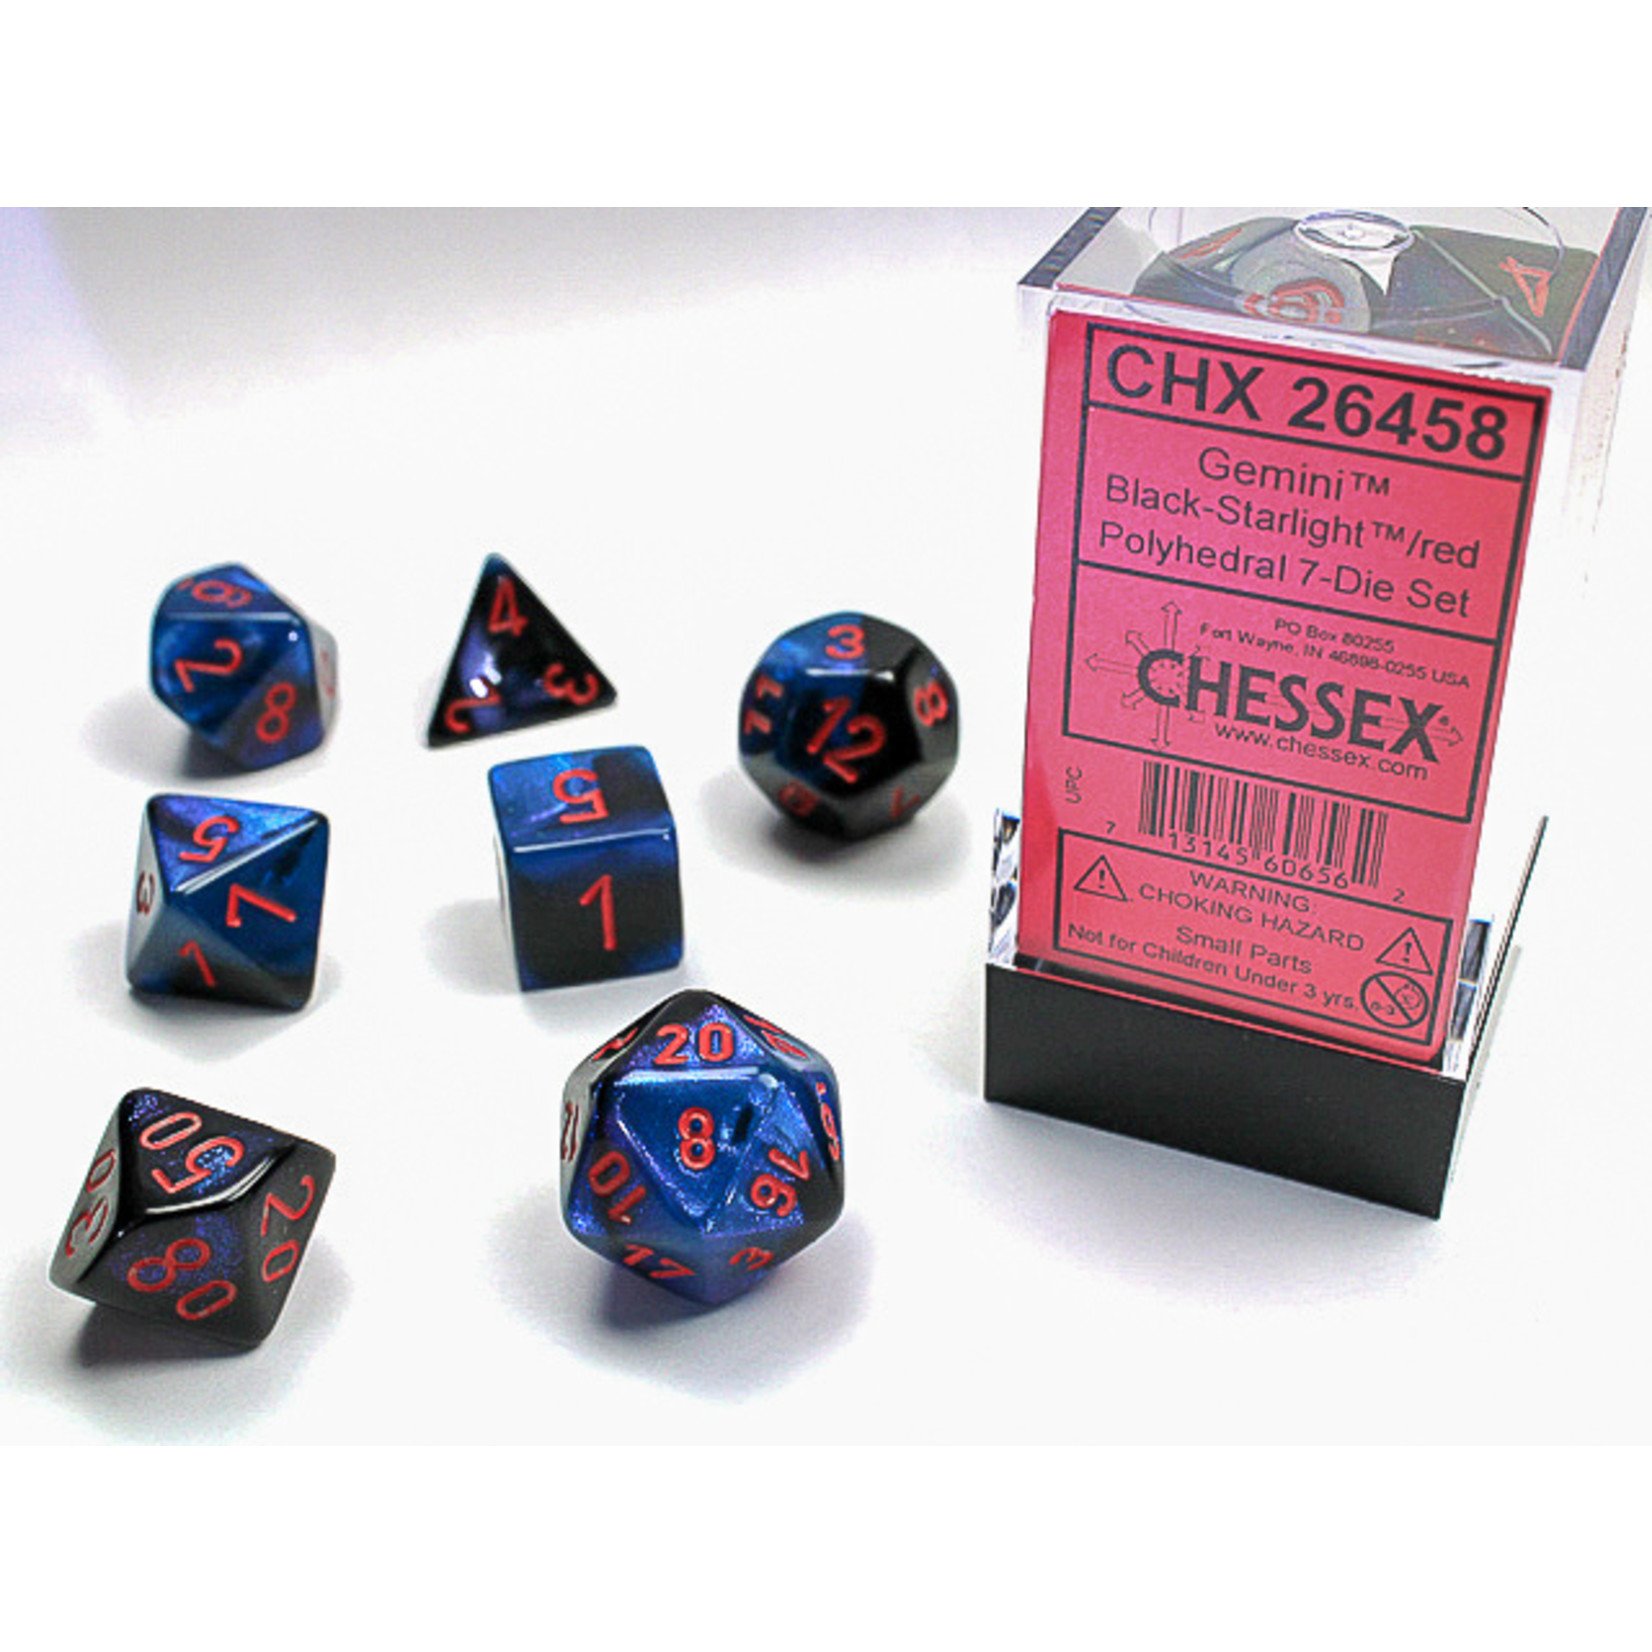 Chessex 26458 Gemini Black-Starlight with Red 7-Set